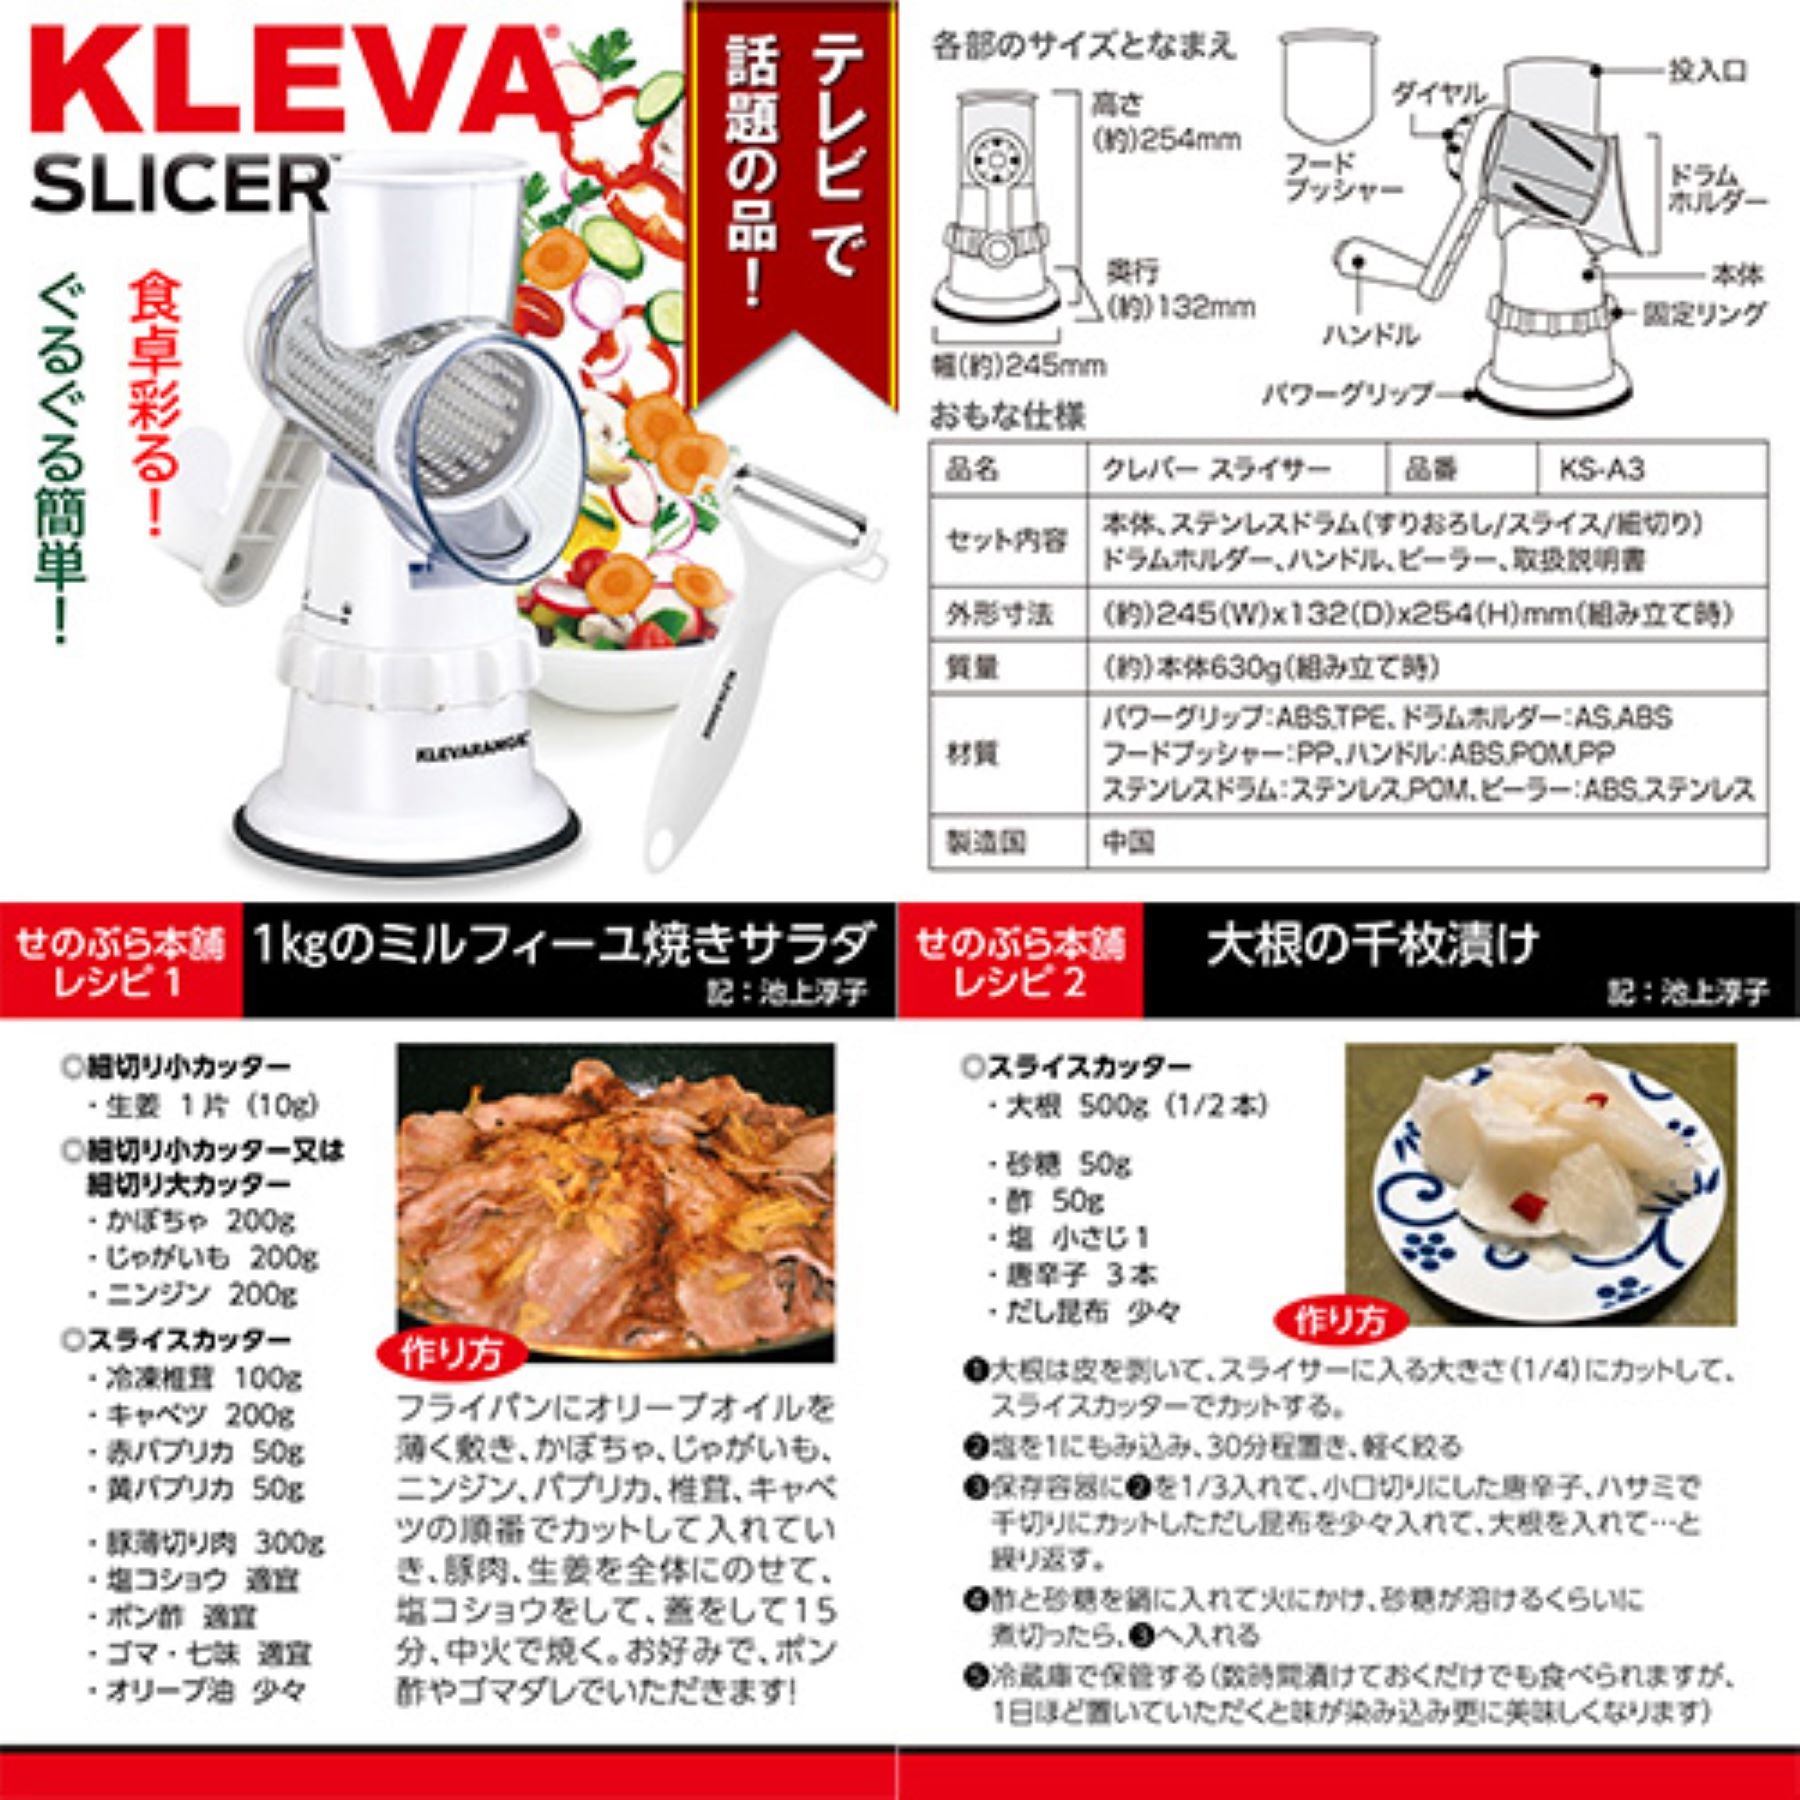 KLEVA SLICER KSーA3 クレバースライサー - 調理器具・料理道具